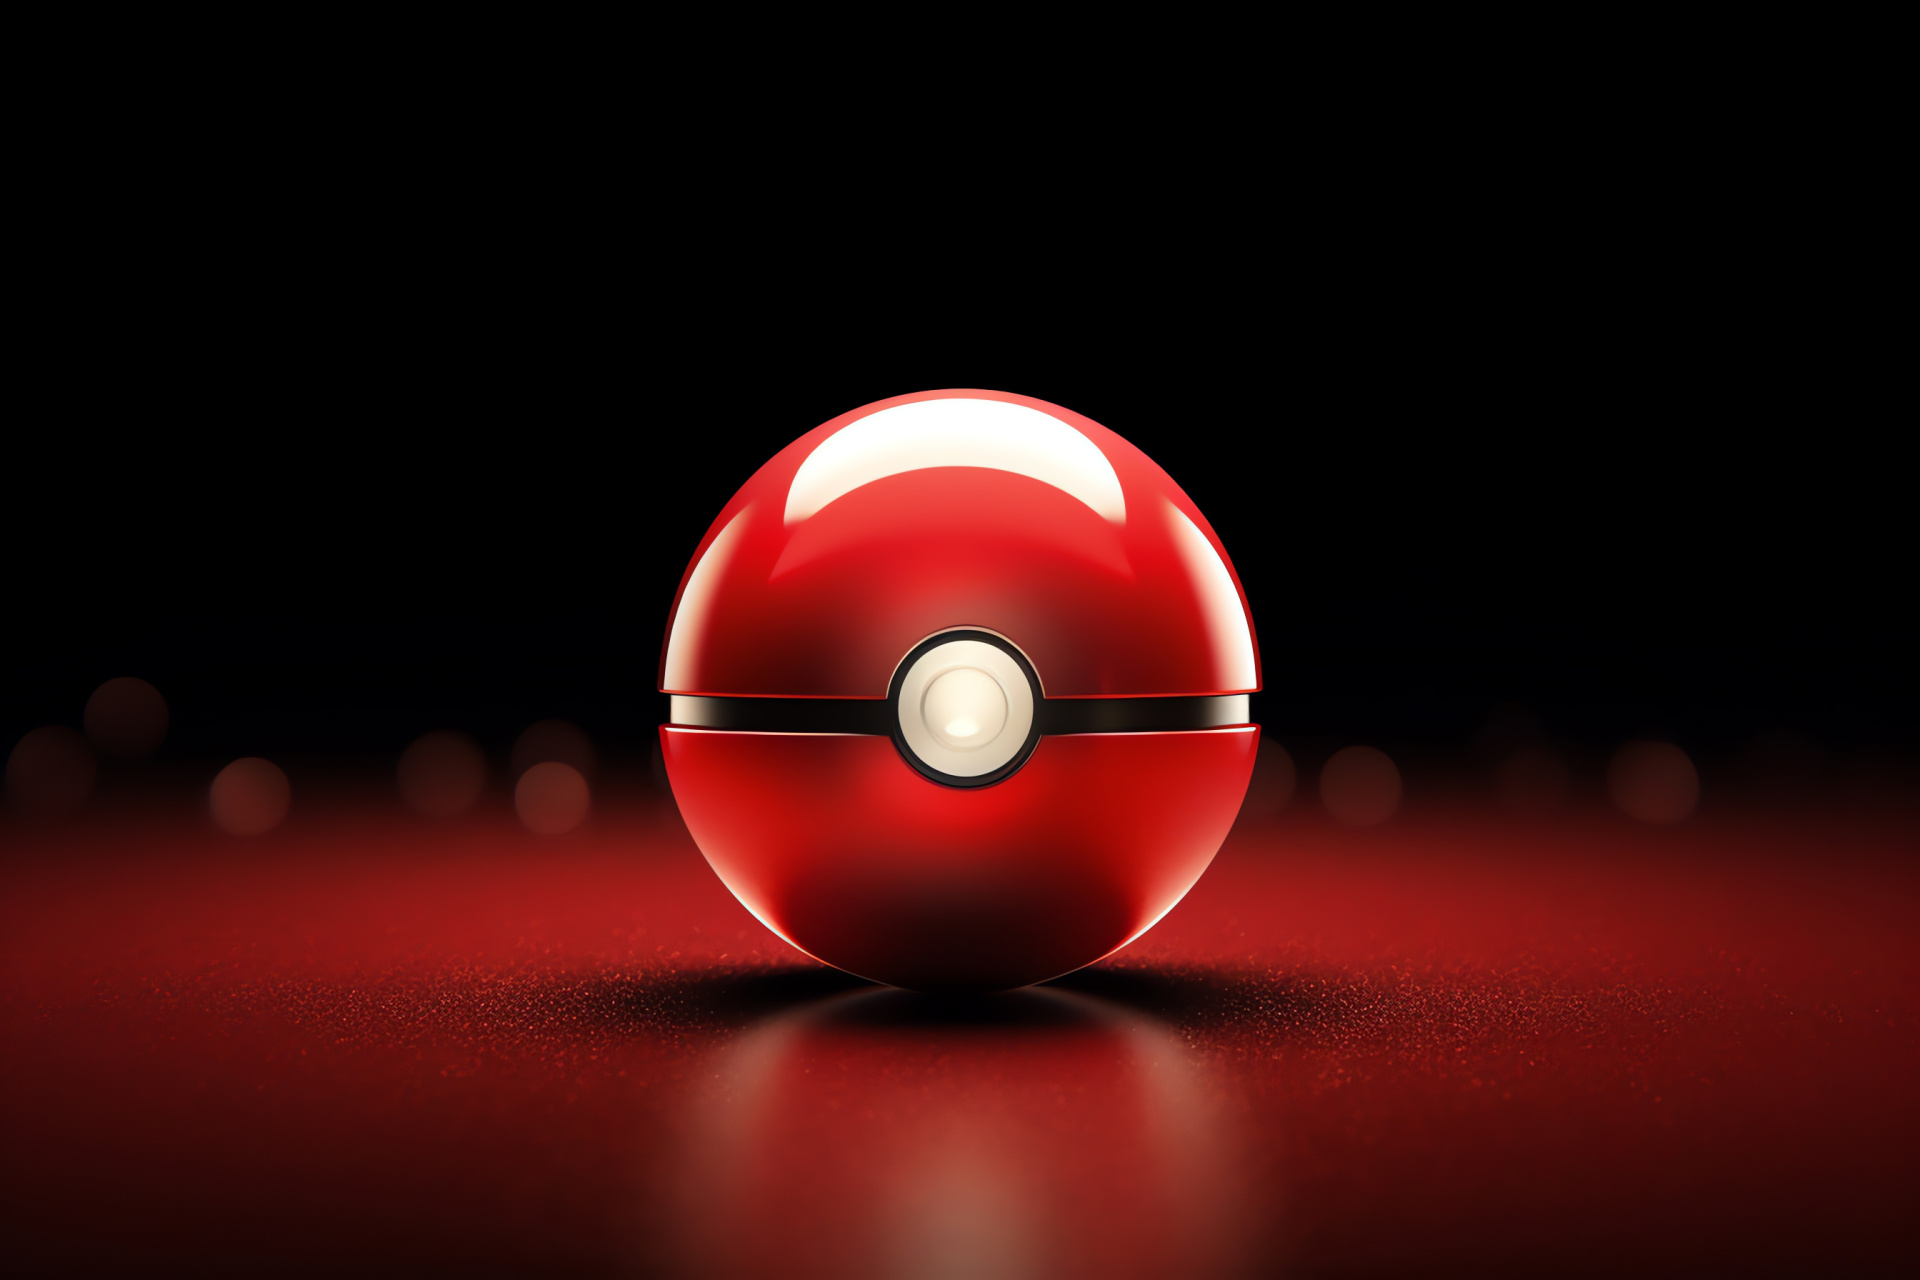 Pokeball focus, Striking crimson, Sphere roll, Captivating object, Dominant feature, HD Desktop Image